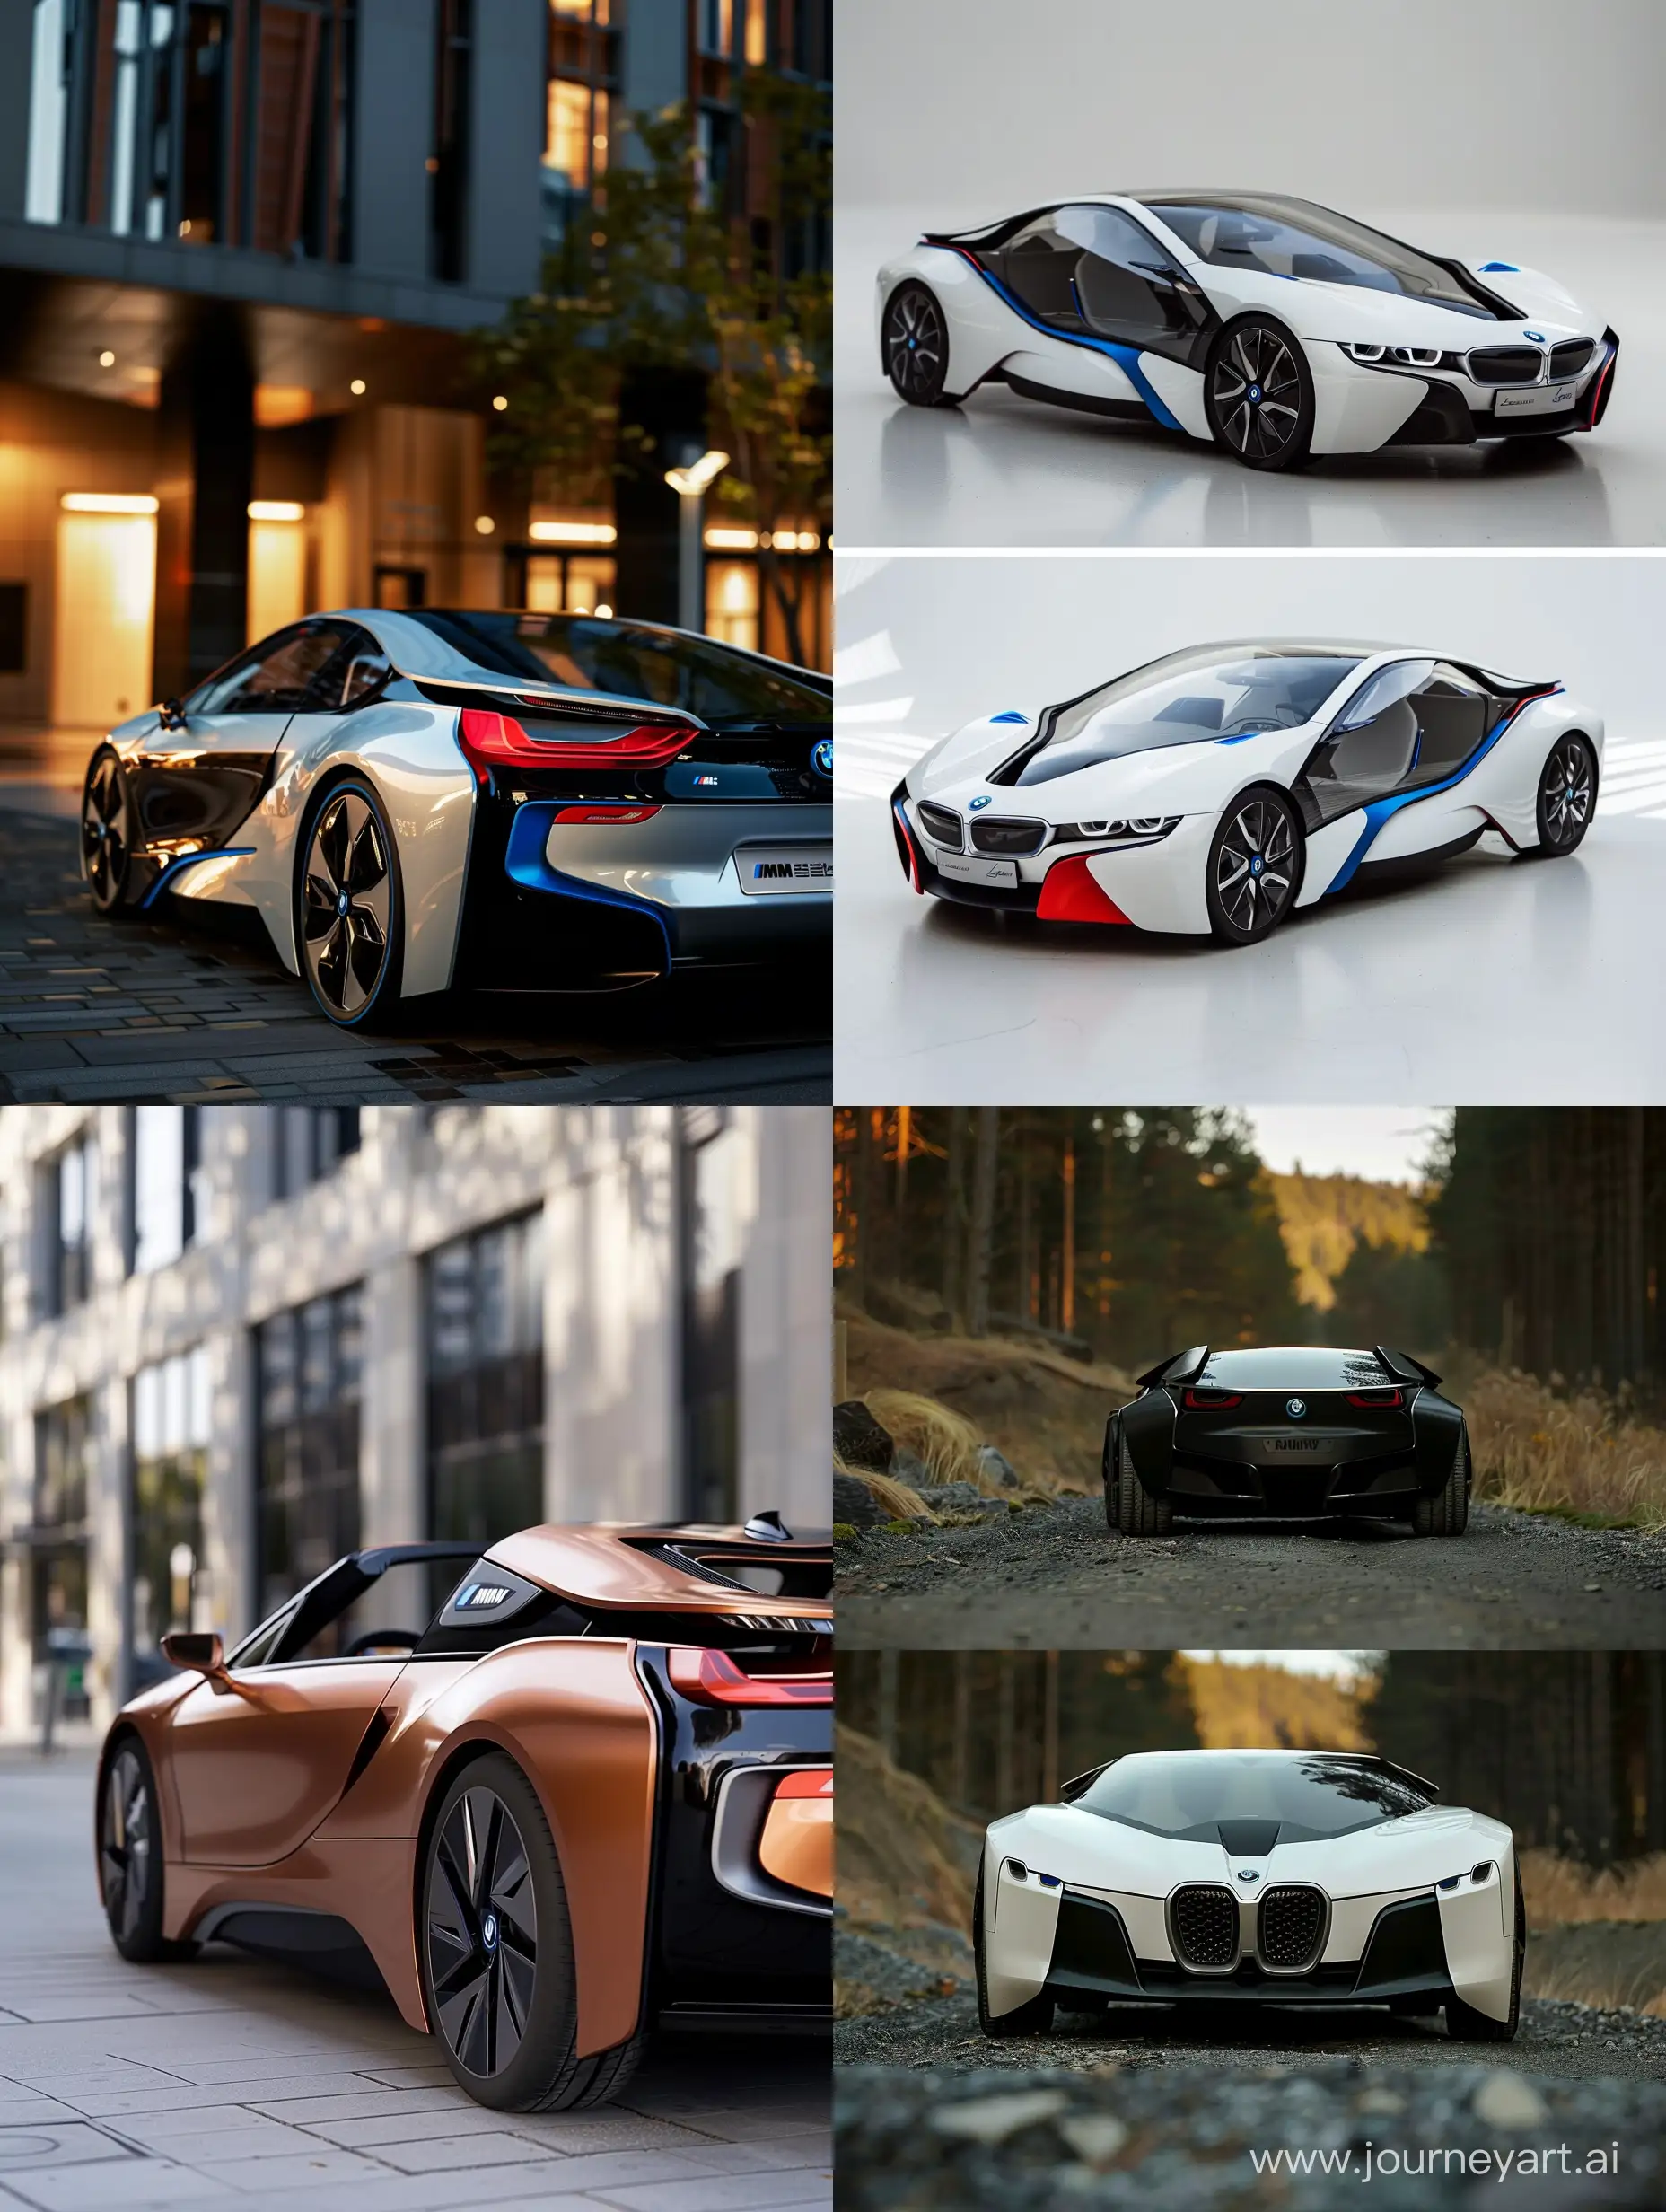 Futuristic-BMW-Concept-Cars-Imagining-Automotive-Evolution-in-2050